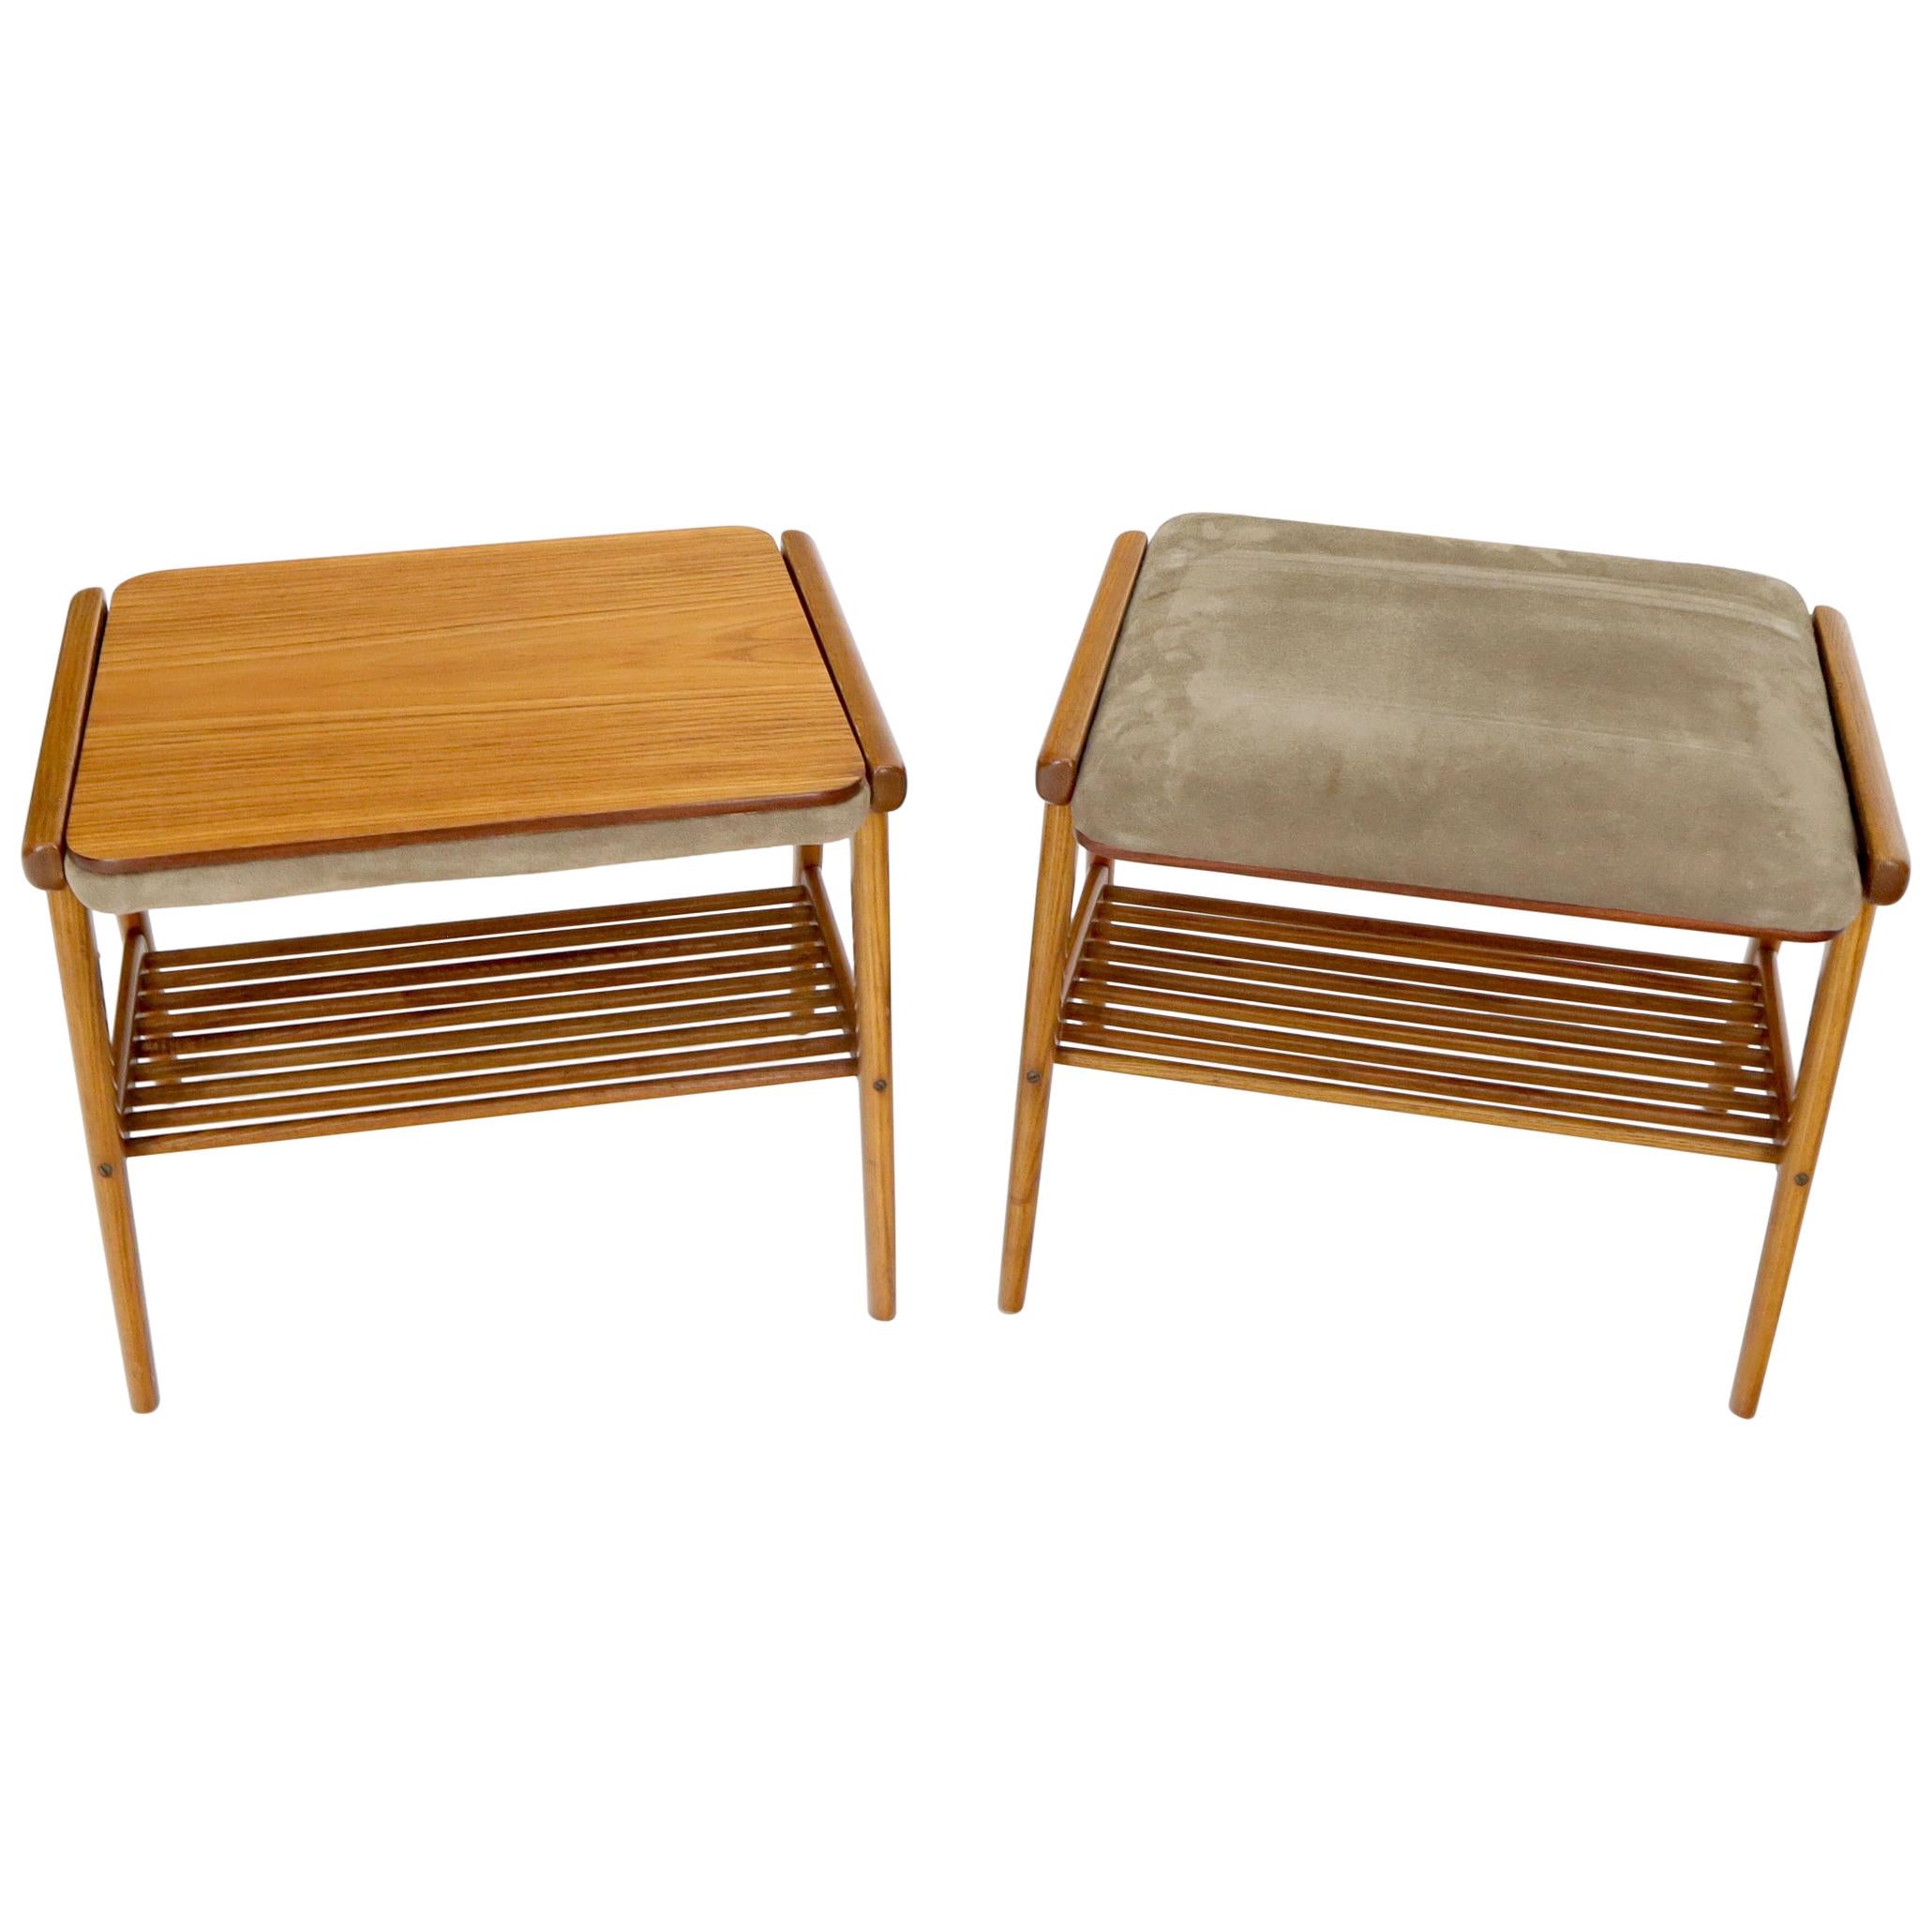 Pair of Danish Teak Mid-Century Modern Flip Top Tables Suede Benches